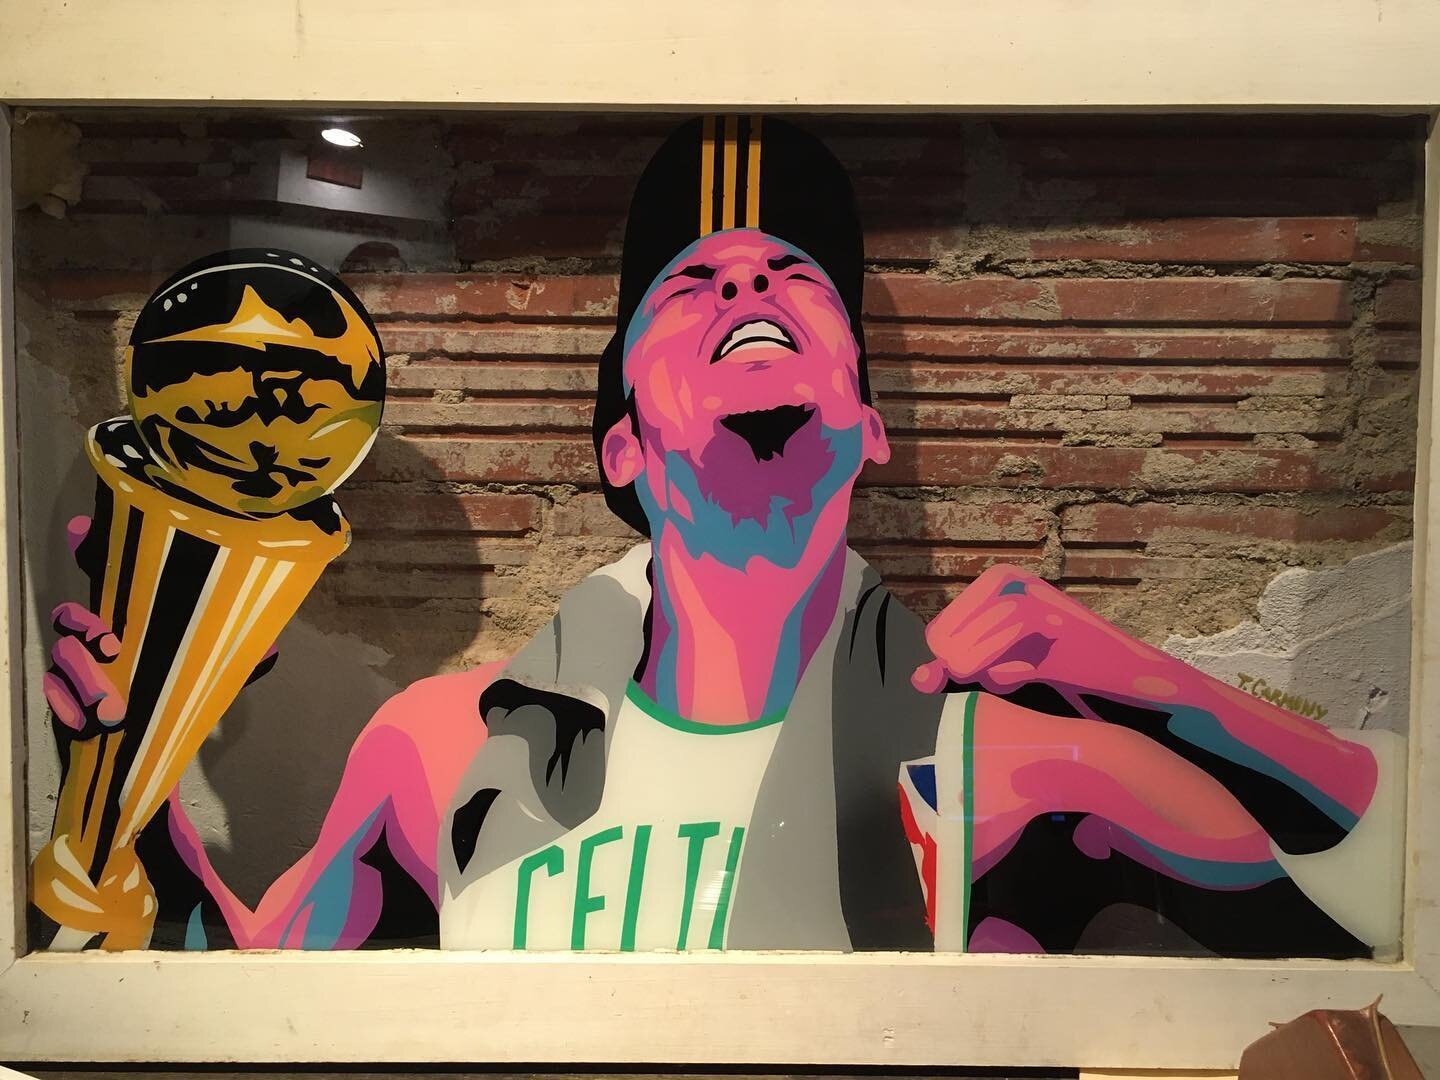 Paul Pierce portrait commission for #FathersDay
.
.
.
.
.
.
.
.
.
 #Celtics #Boston #BostonCeltics #PaulPierce #&macr;\_(ツ)_/&macr;